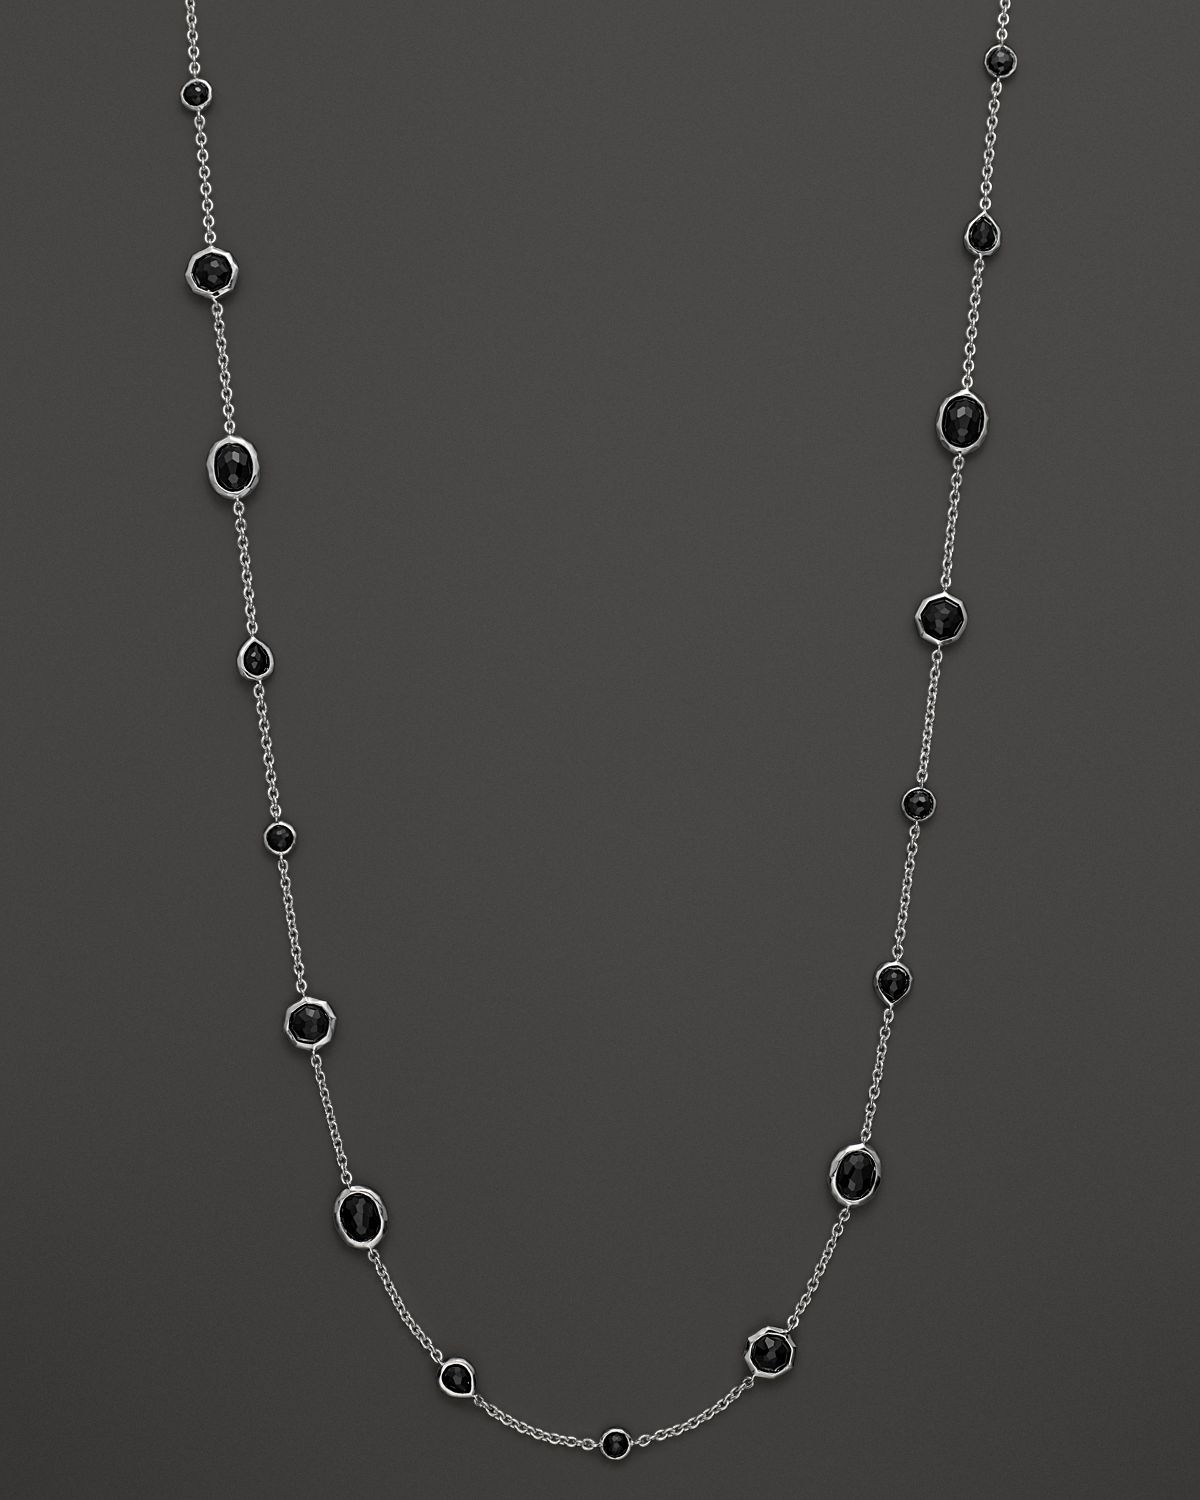 Lyst - Ippolita Sterling Silver Wonderland Long Necklace in Black Onyx